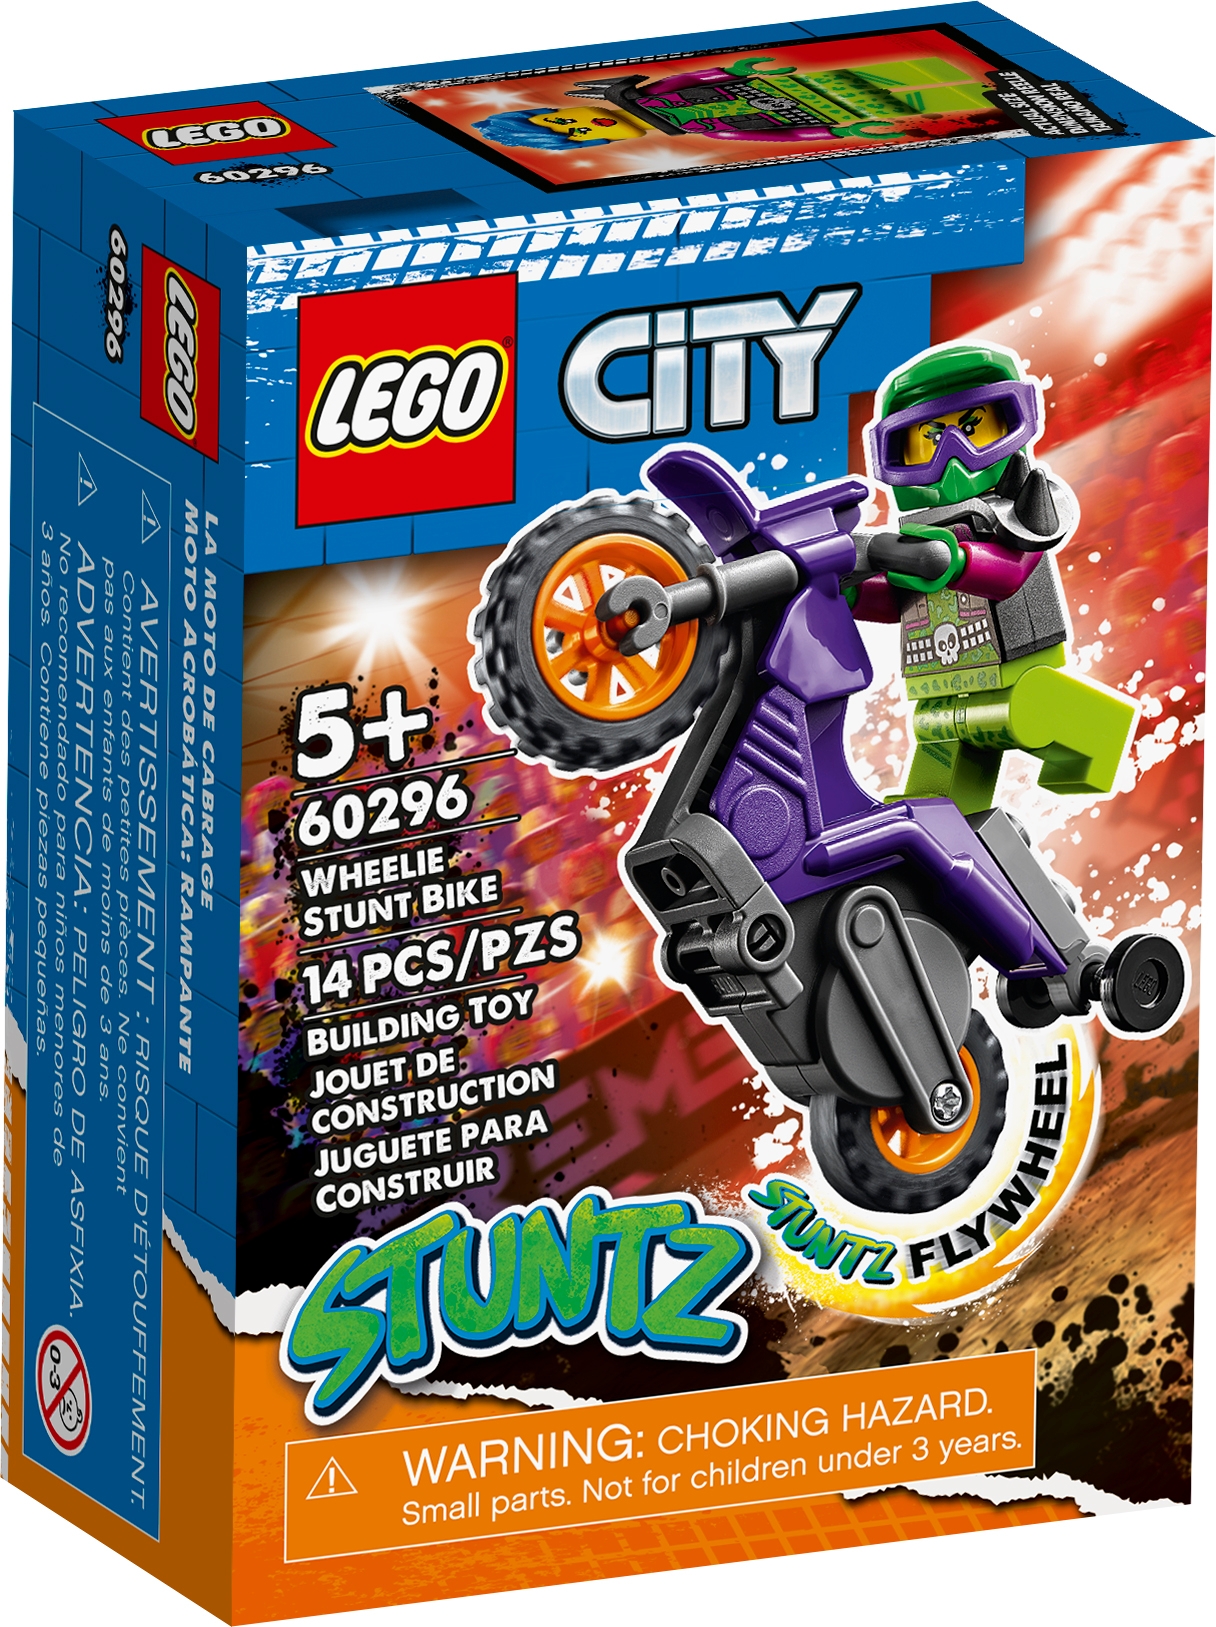 Wheelie Bike 60296 | City | Buy online at the Official LEGO® Shop US